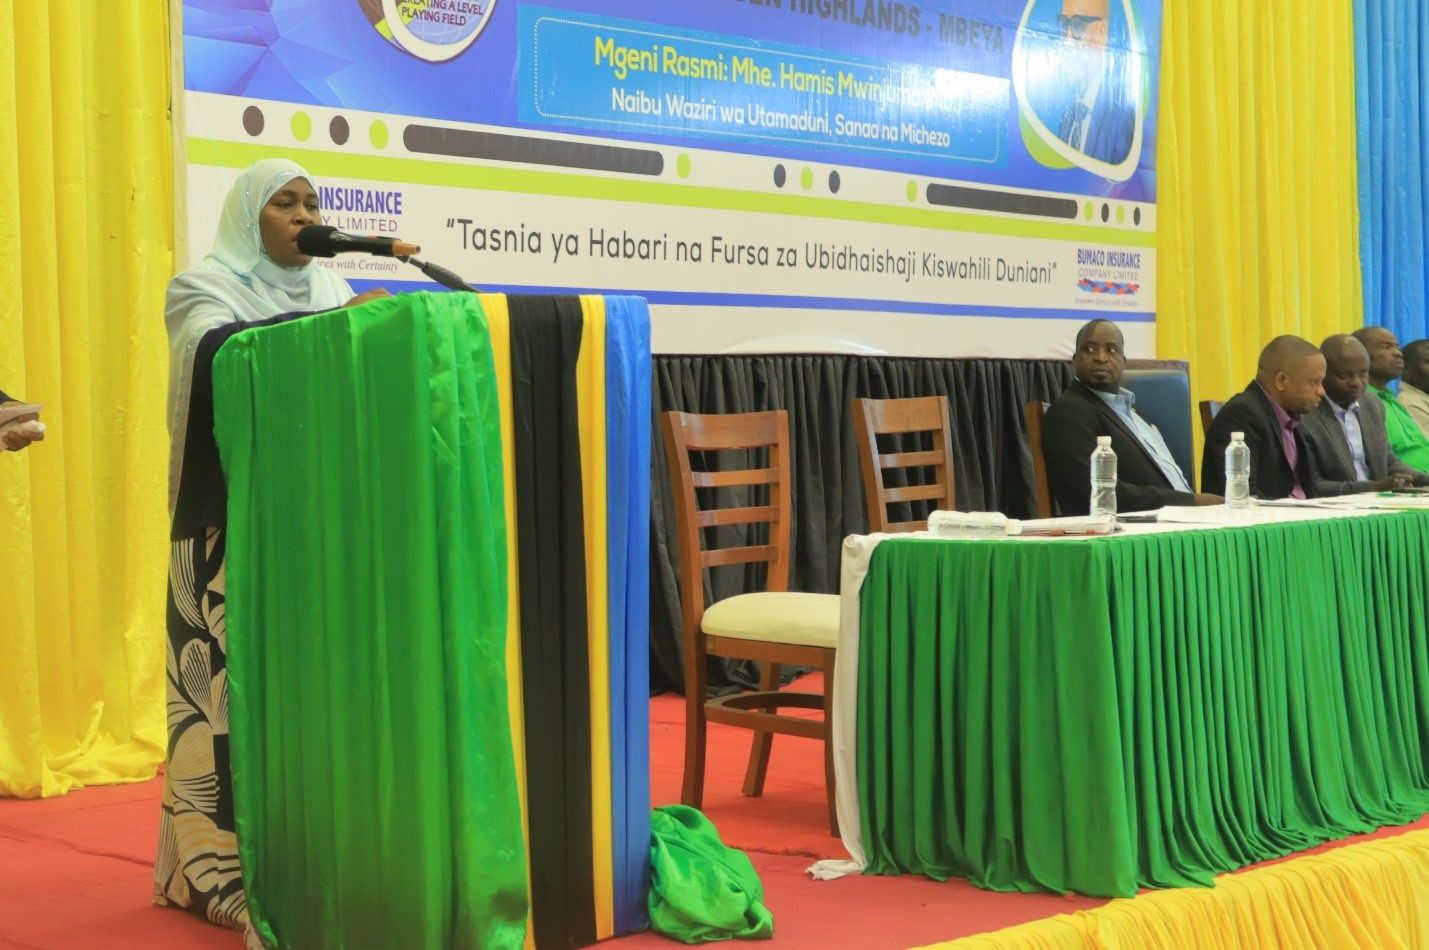 The Executive Secretary of the Zanzibar Kiswahili Council, Dr. Mwanaija Omary, speaking at the Fourth World Kiswahili Channels Conference